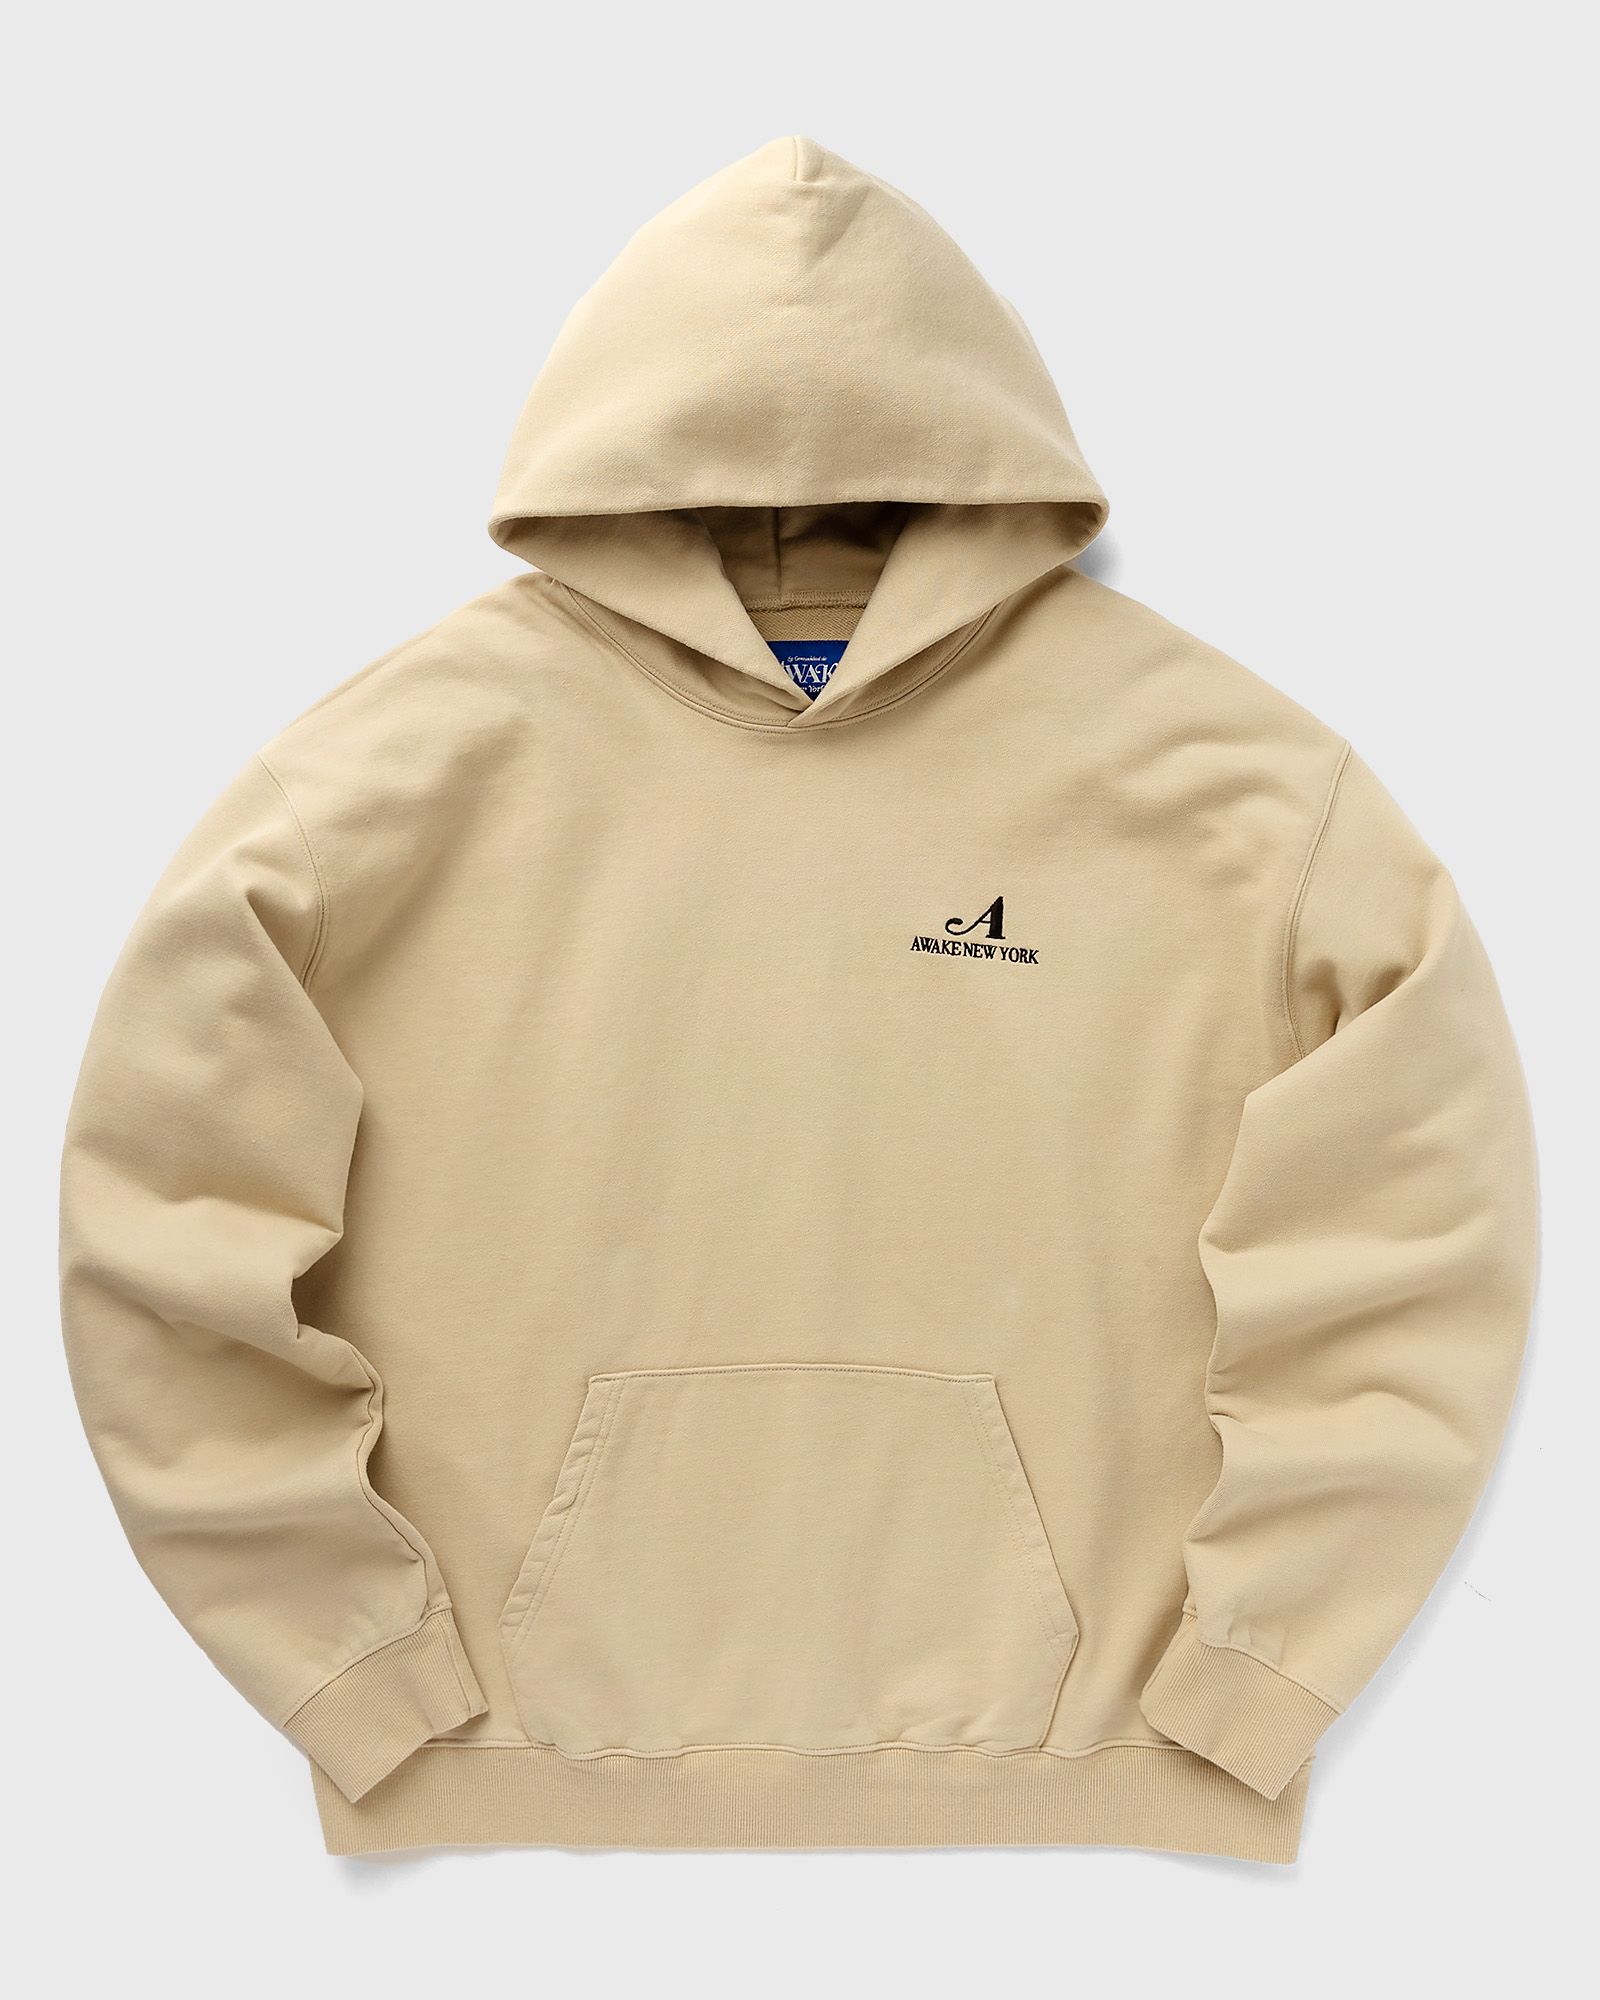 awake embroidered logo hoodie men hoodies